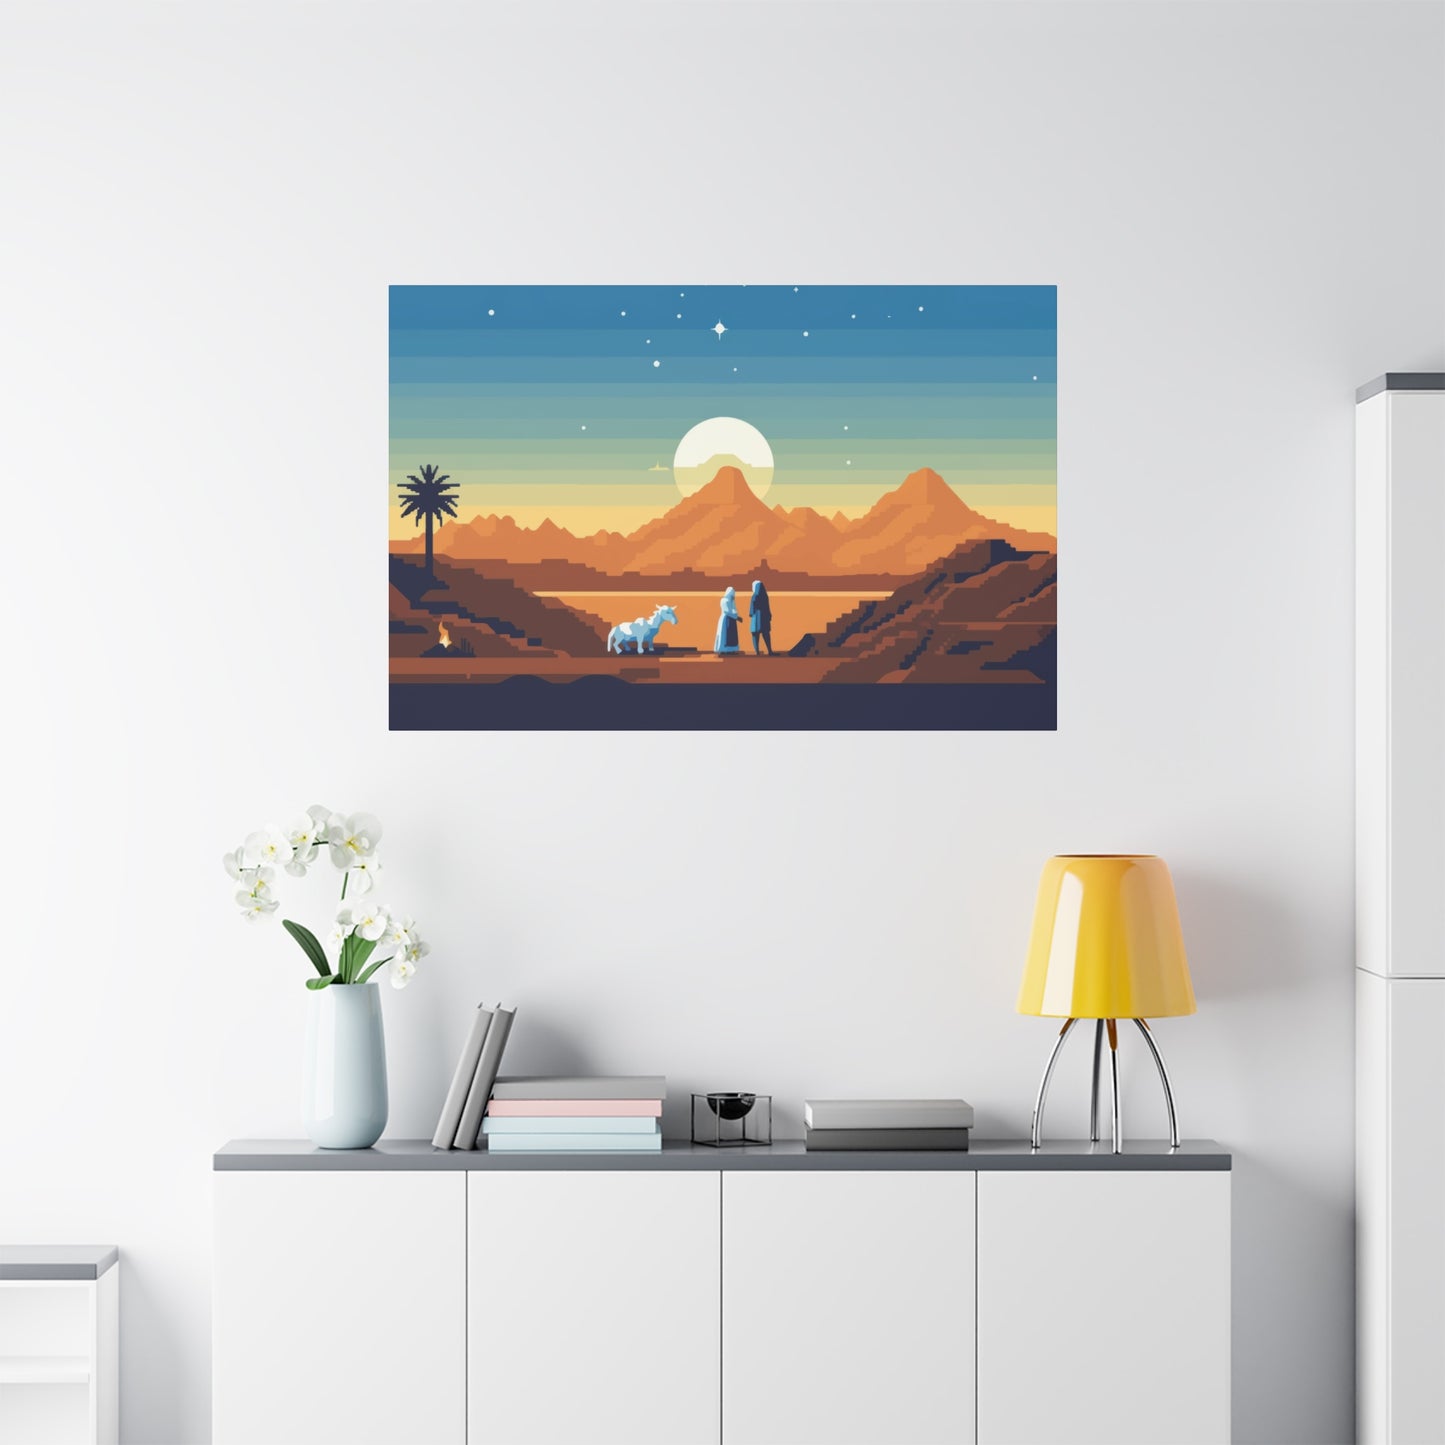 Pixel Wall Art & Canvas Prints